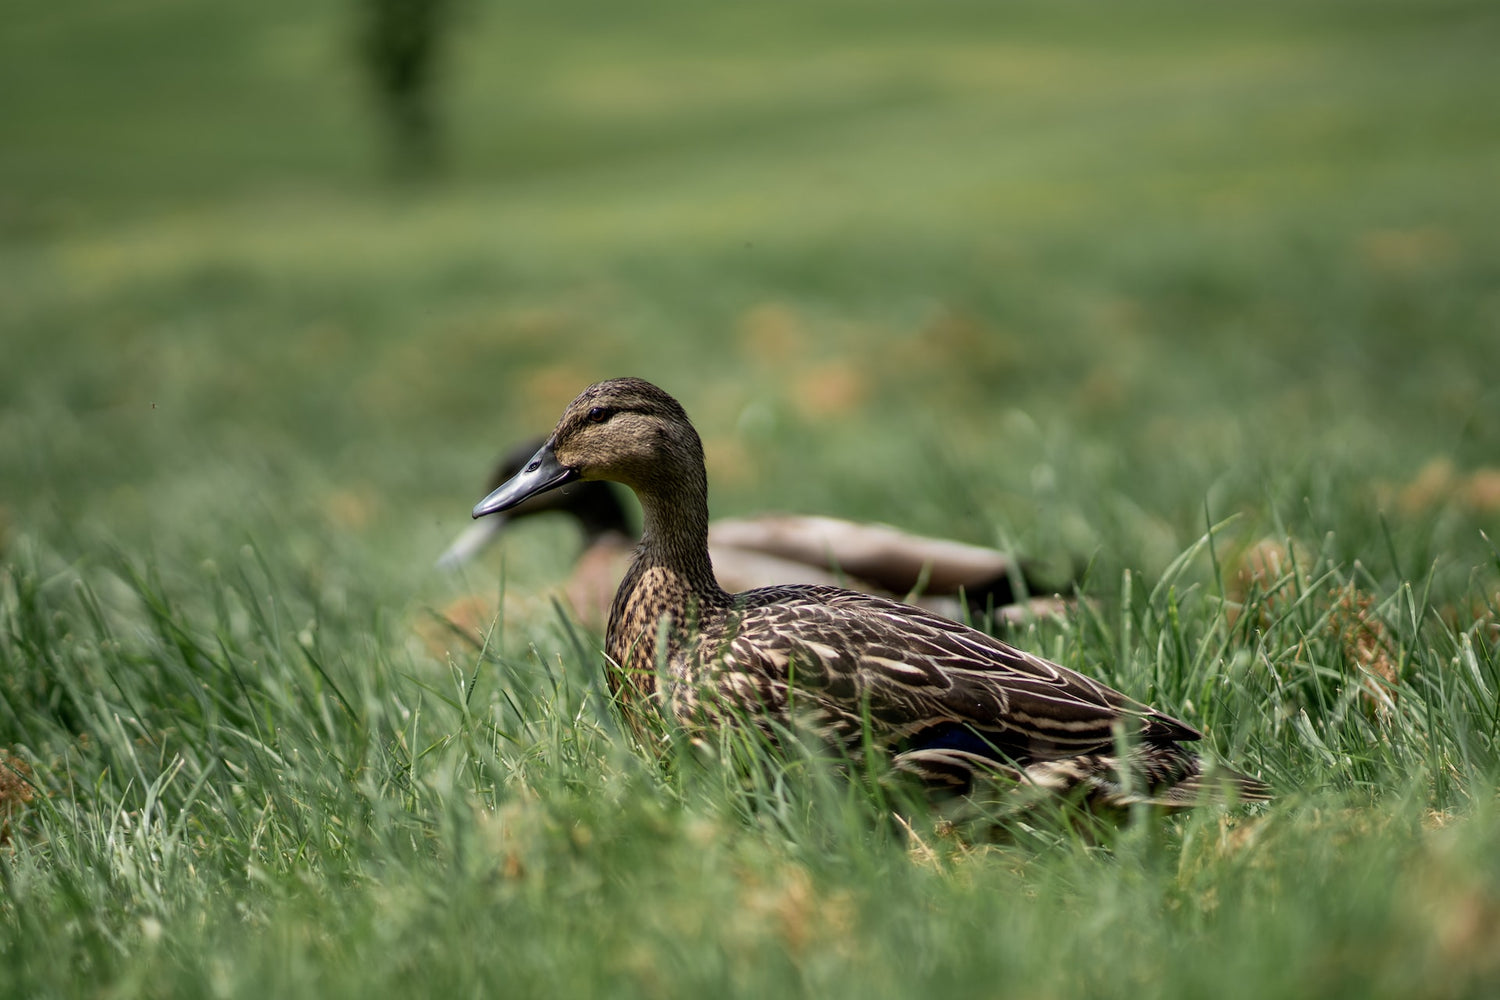 A Beginners Guide to Keeping Backyard Ducks